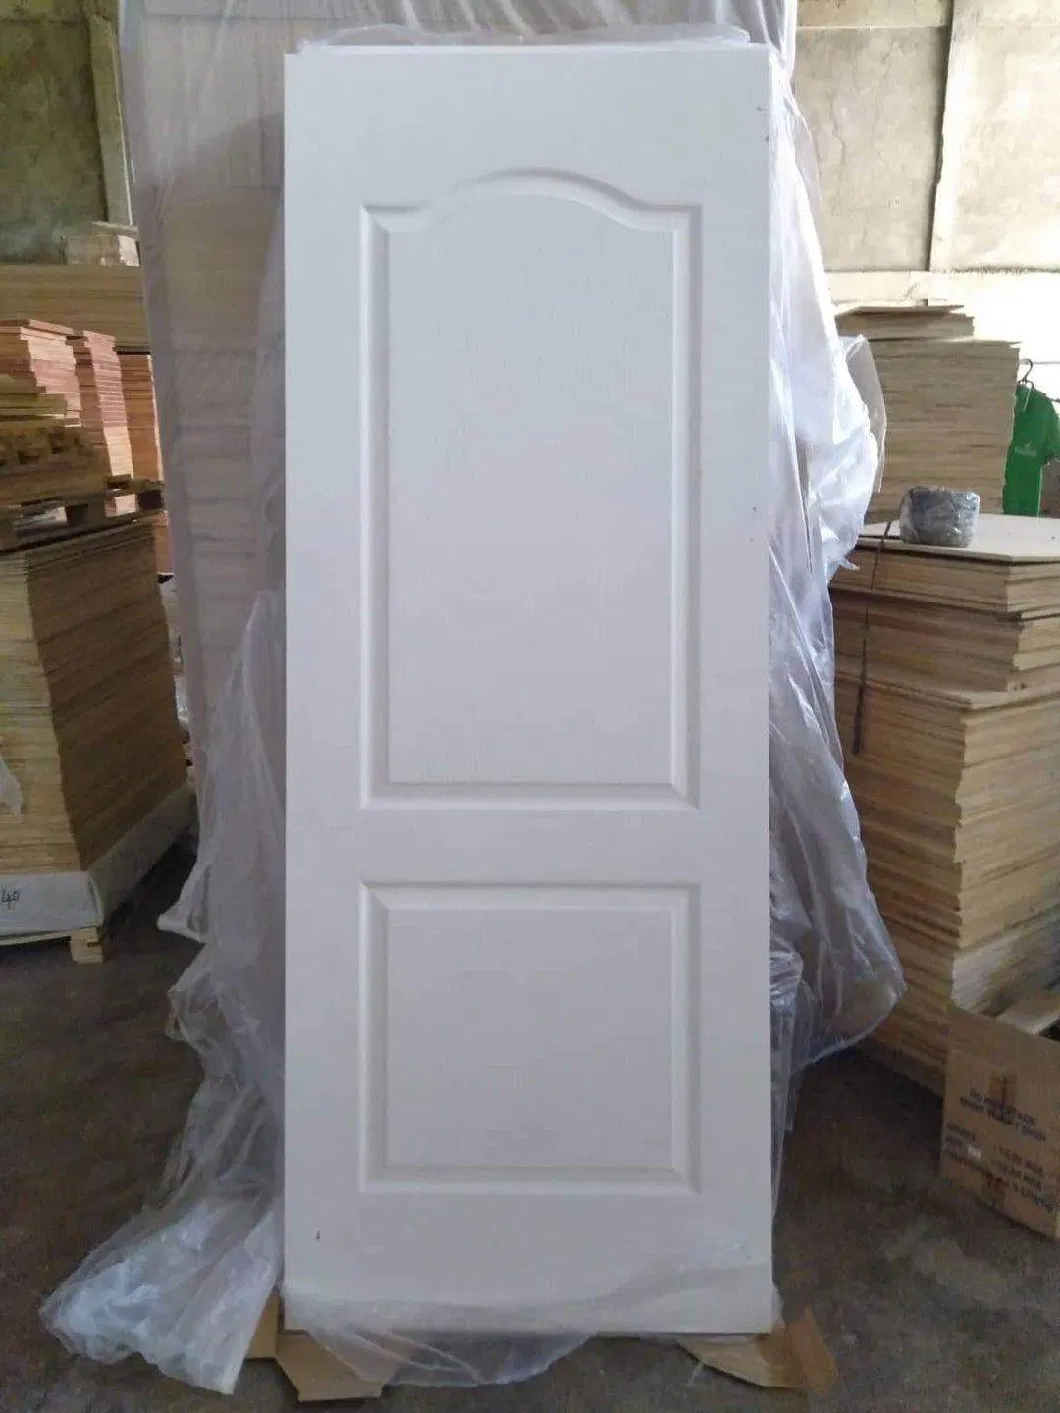 Walnut Wood Color Melamine Surface Free Painting Interior Wood Door